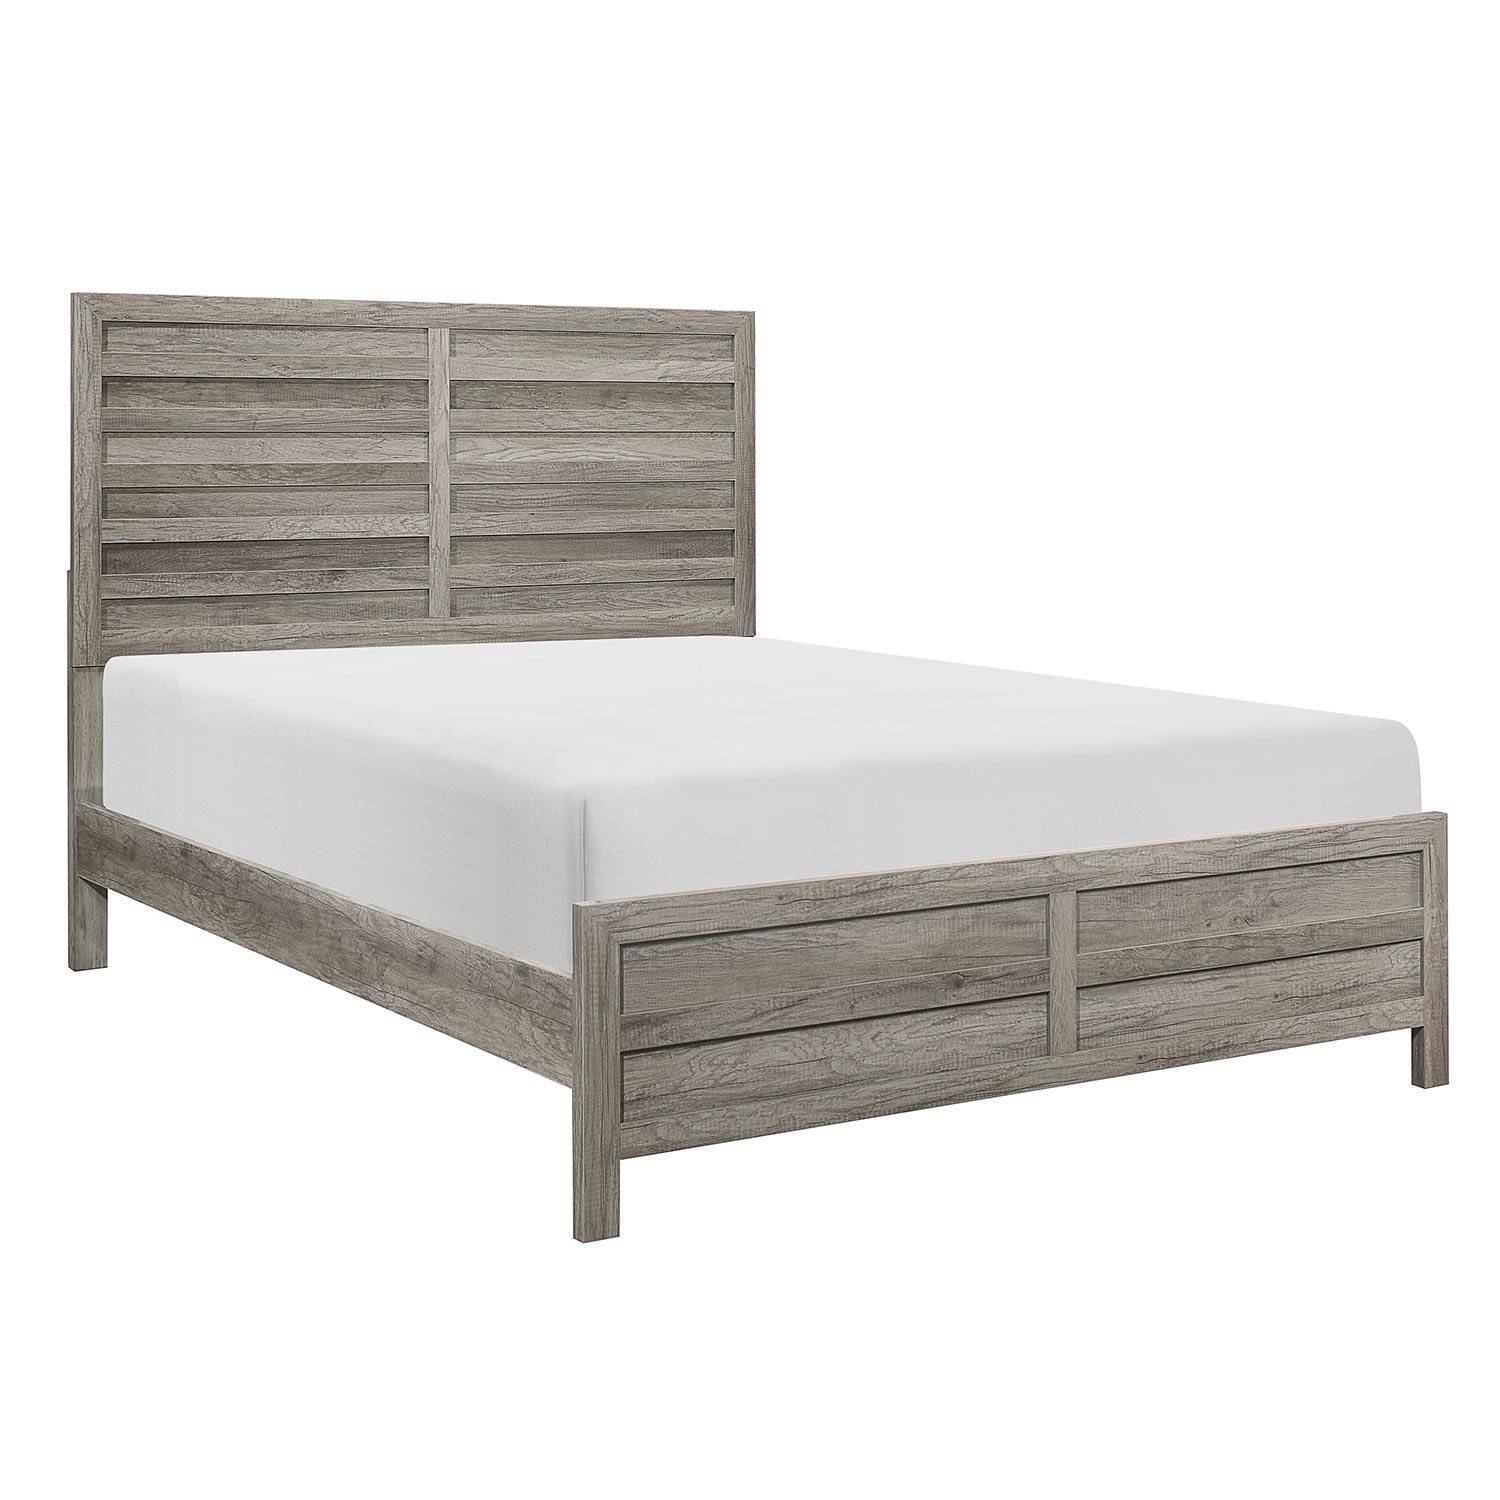 Homelegance Mandan Bed - Weathered Gray